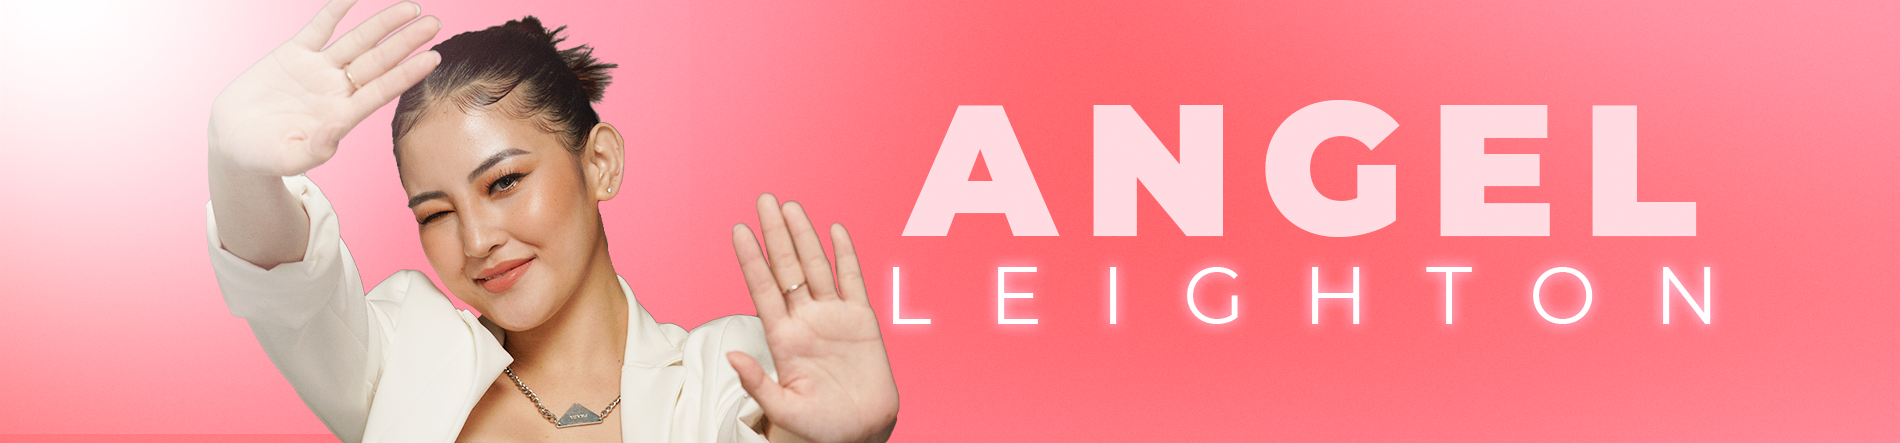 Angel Leighton Desktop Banner